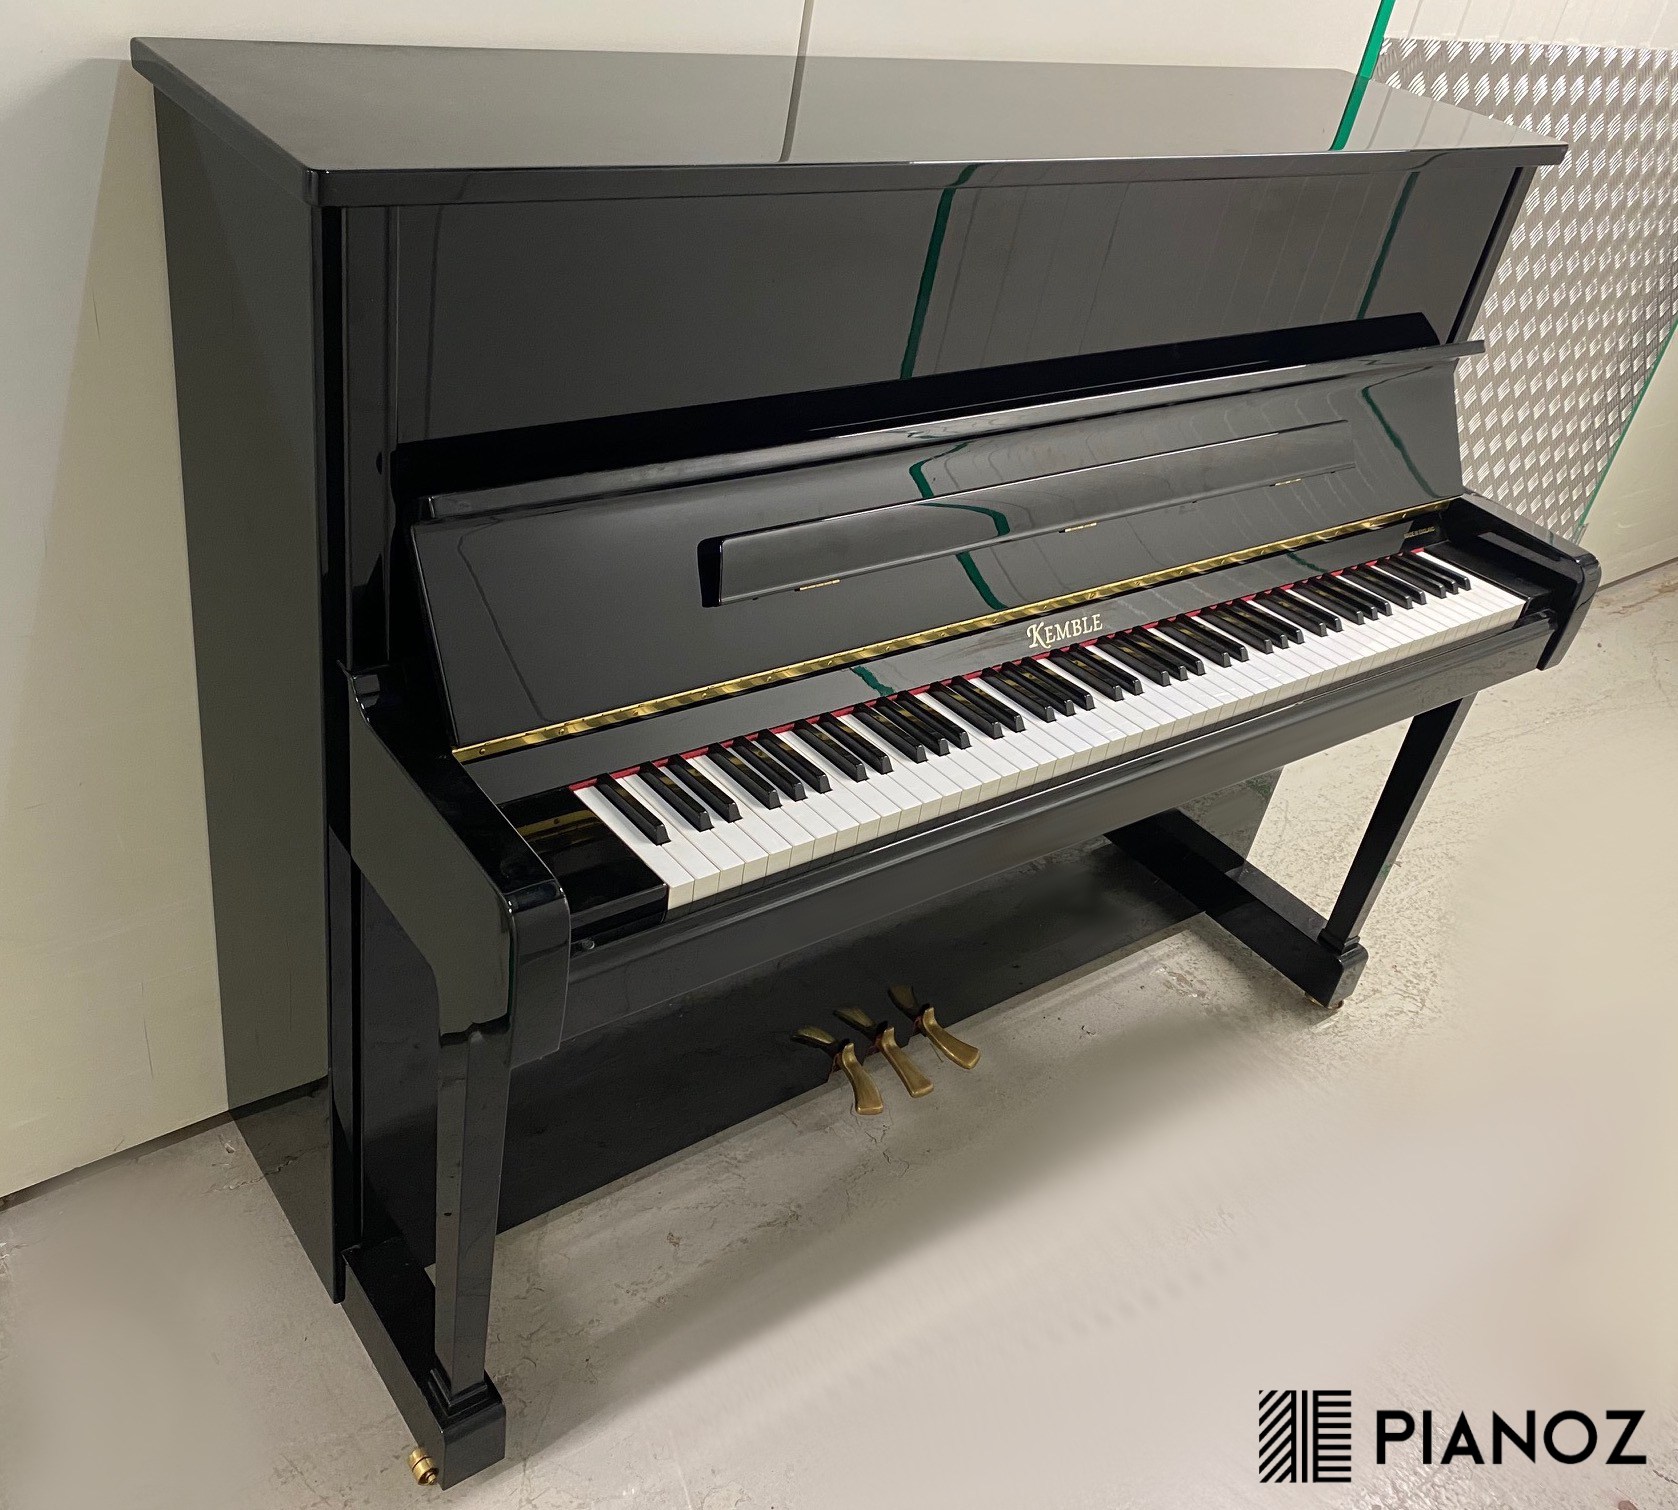 Yamaha Kemble 121/ U1 Upright Piano piano for sale in UK